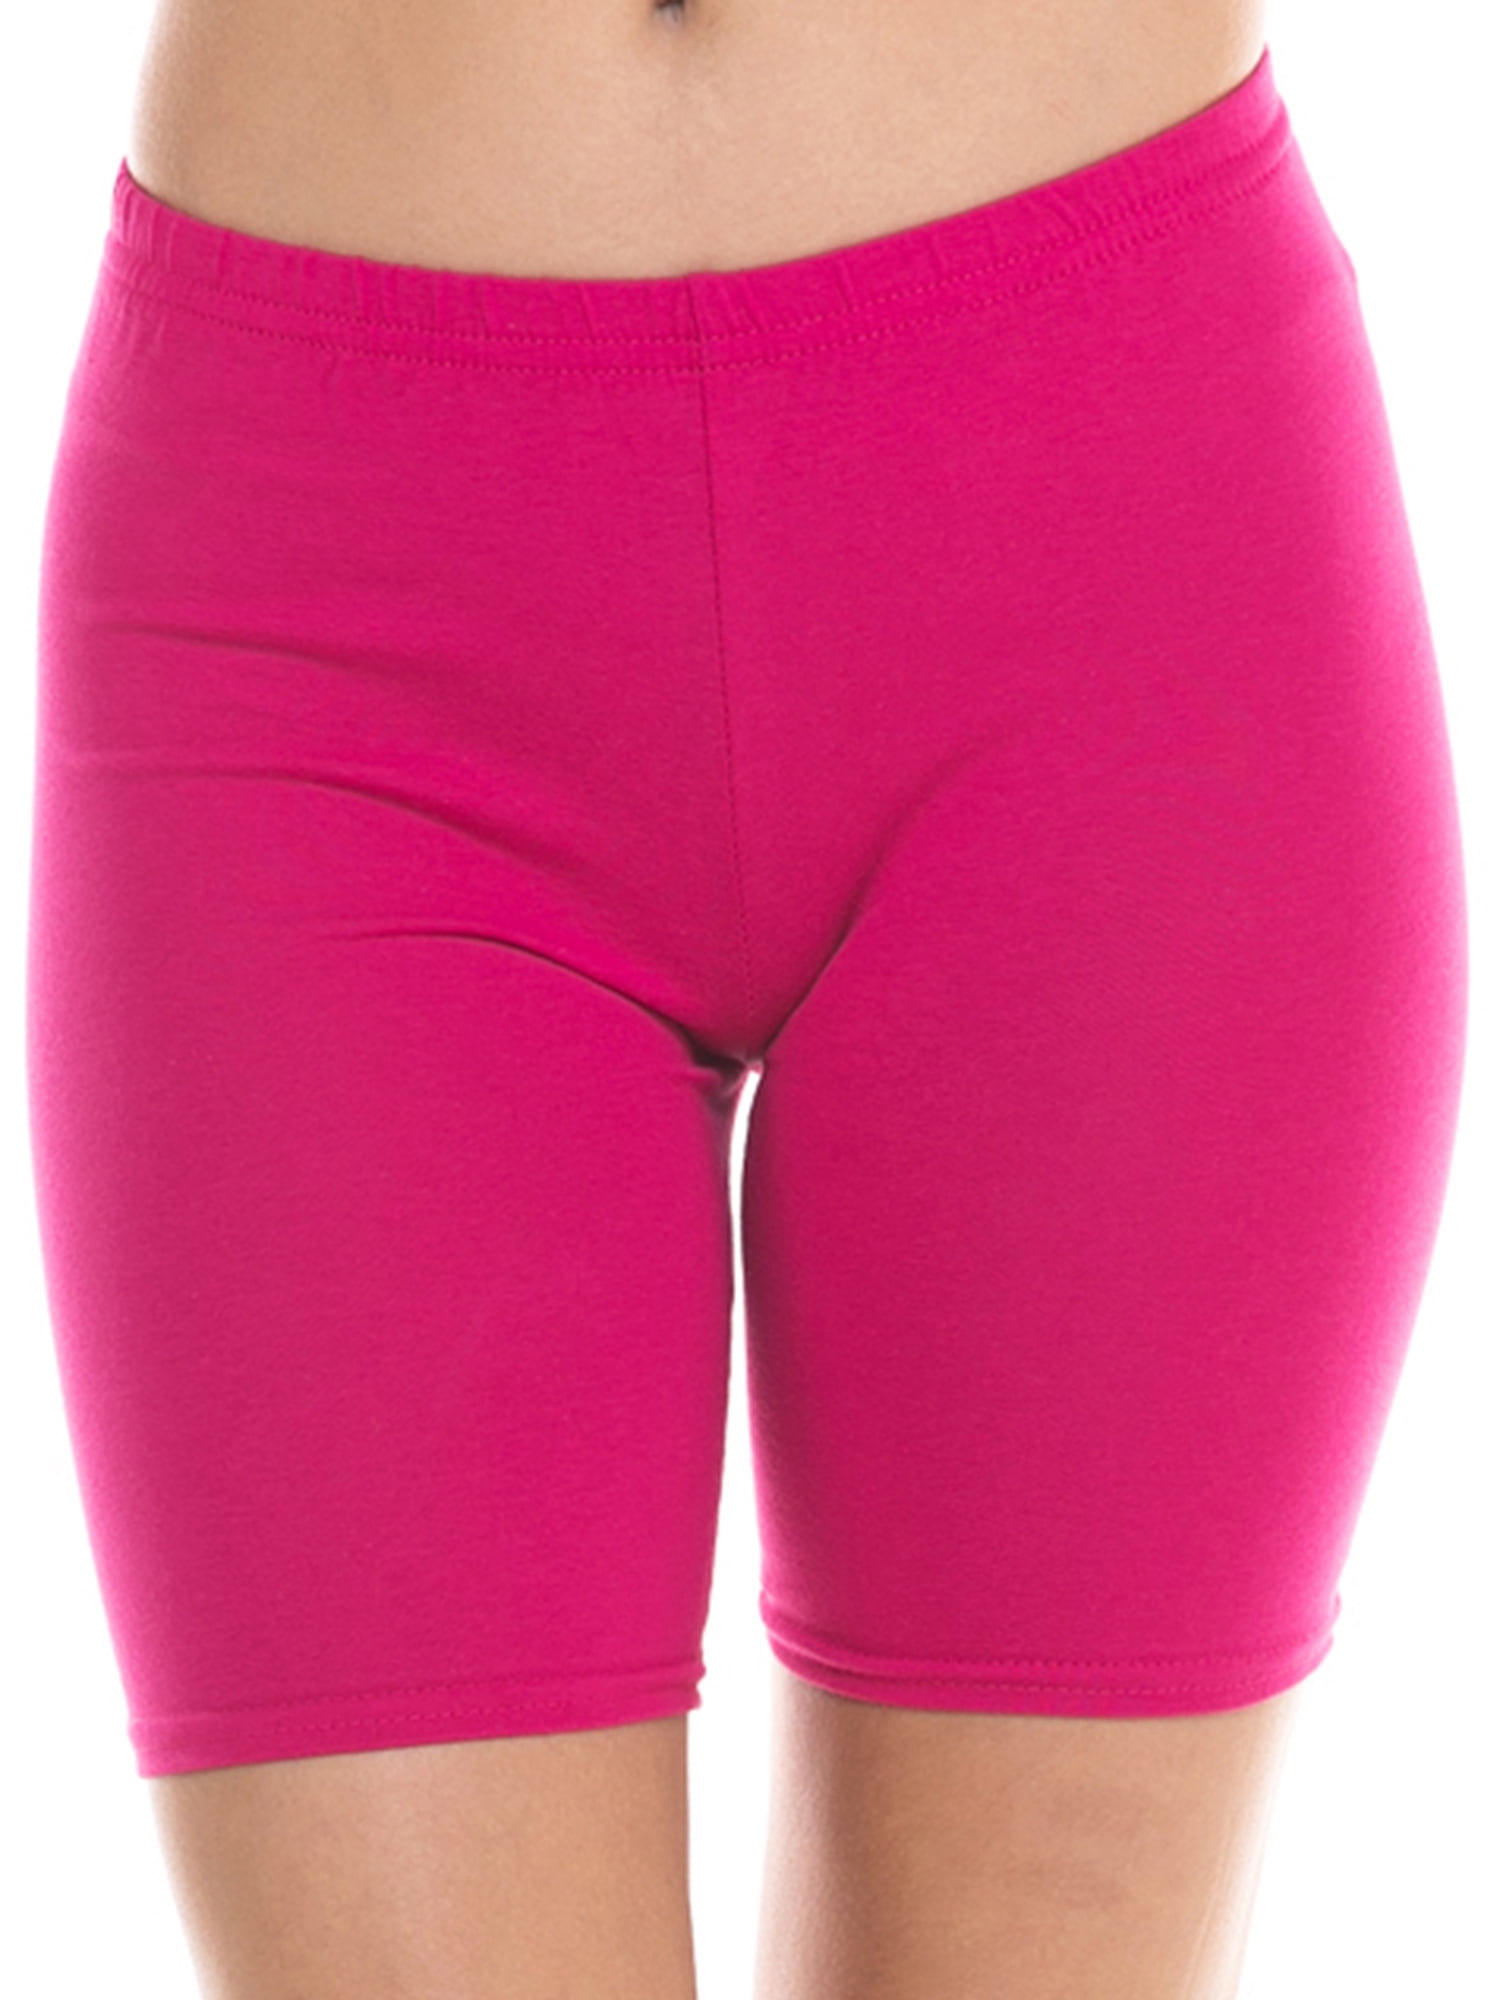 Ola Mari's Junior Plus Size Solid Plain Cotton Biker Shorts - Walmart.com